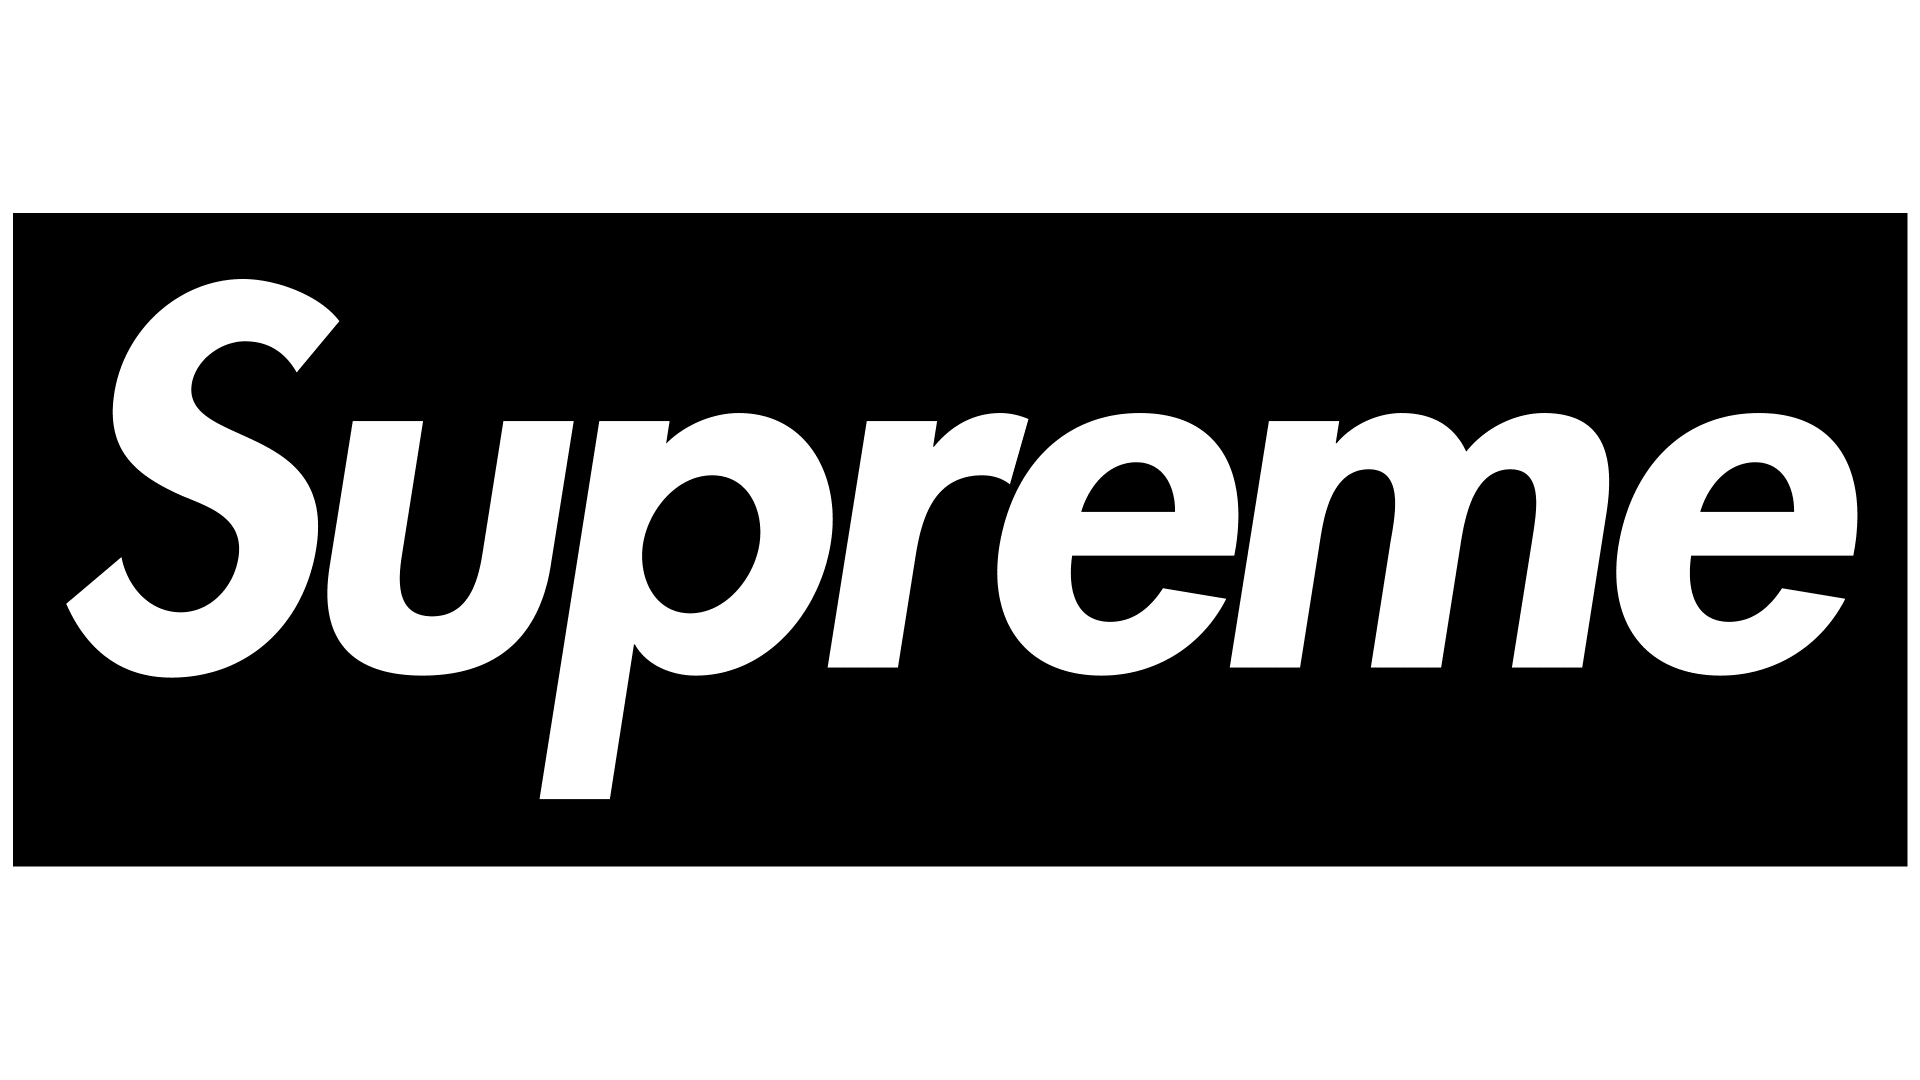 supreme logo black